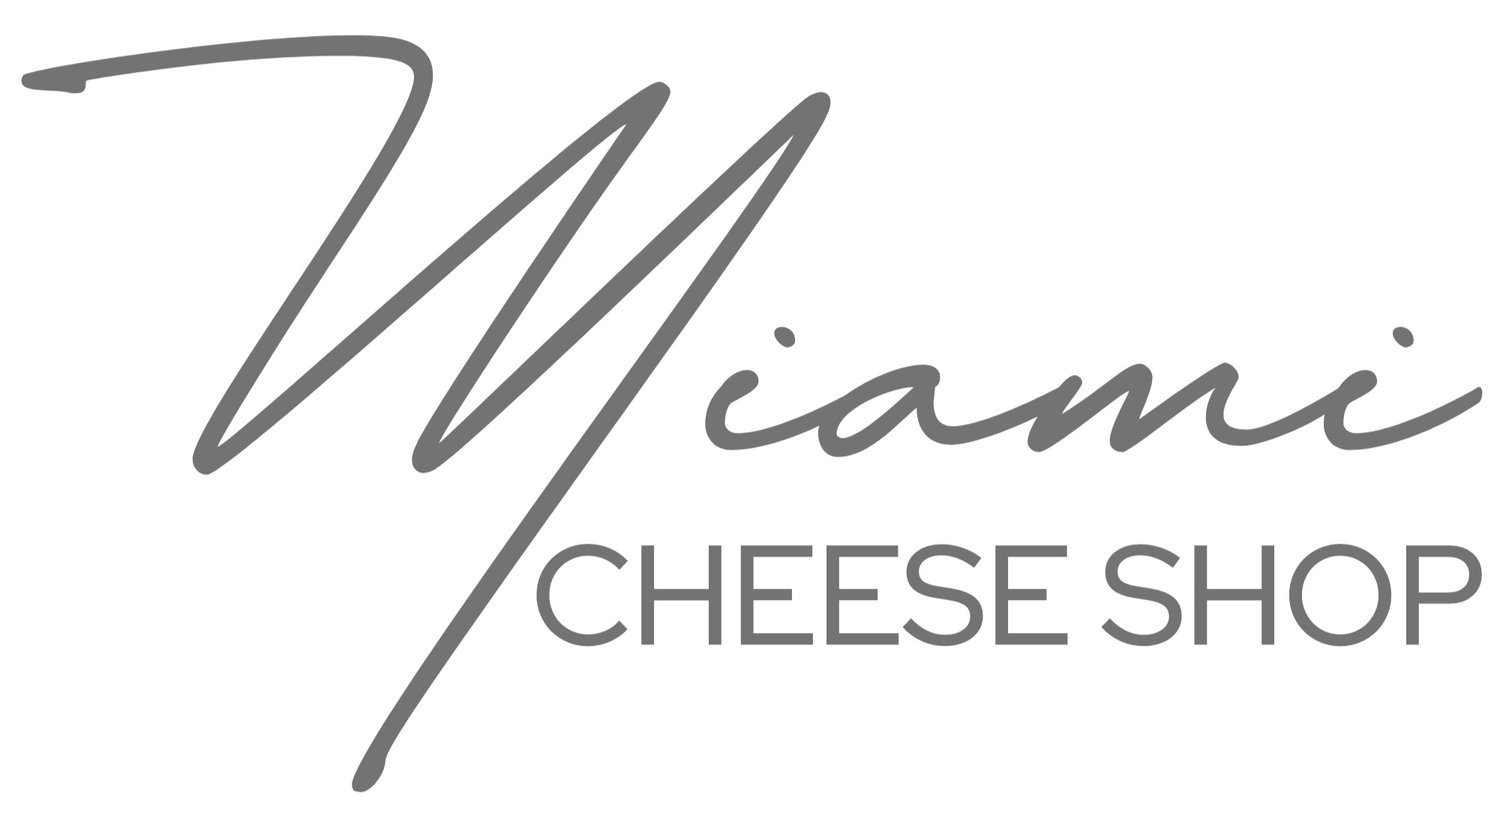 Miami Cheese Shop